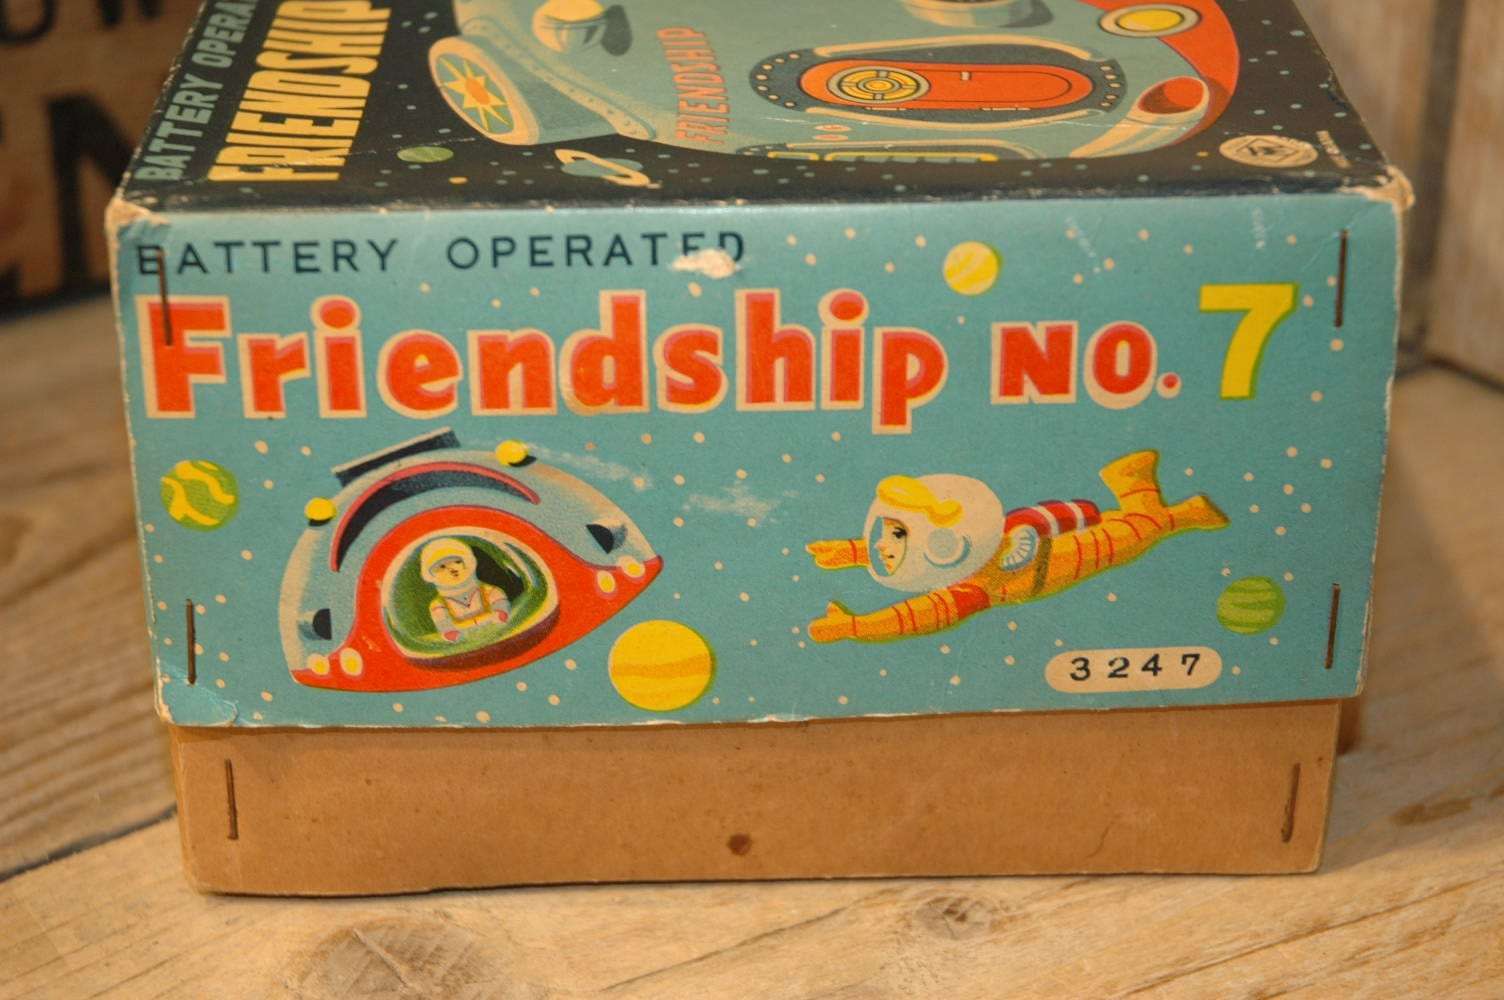 Modern Toys - Friendship #7 